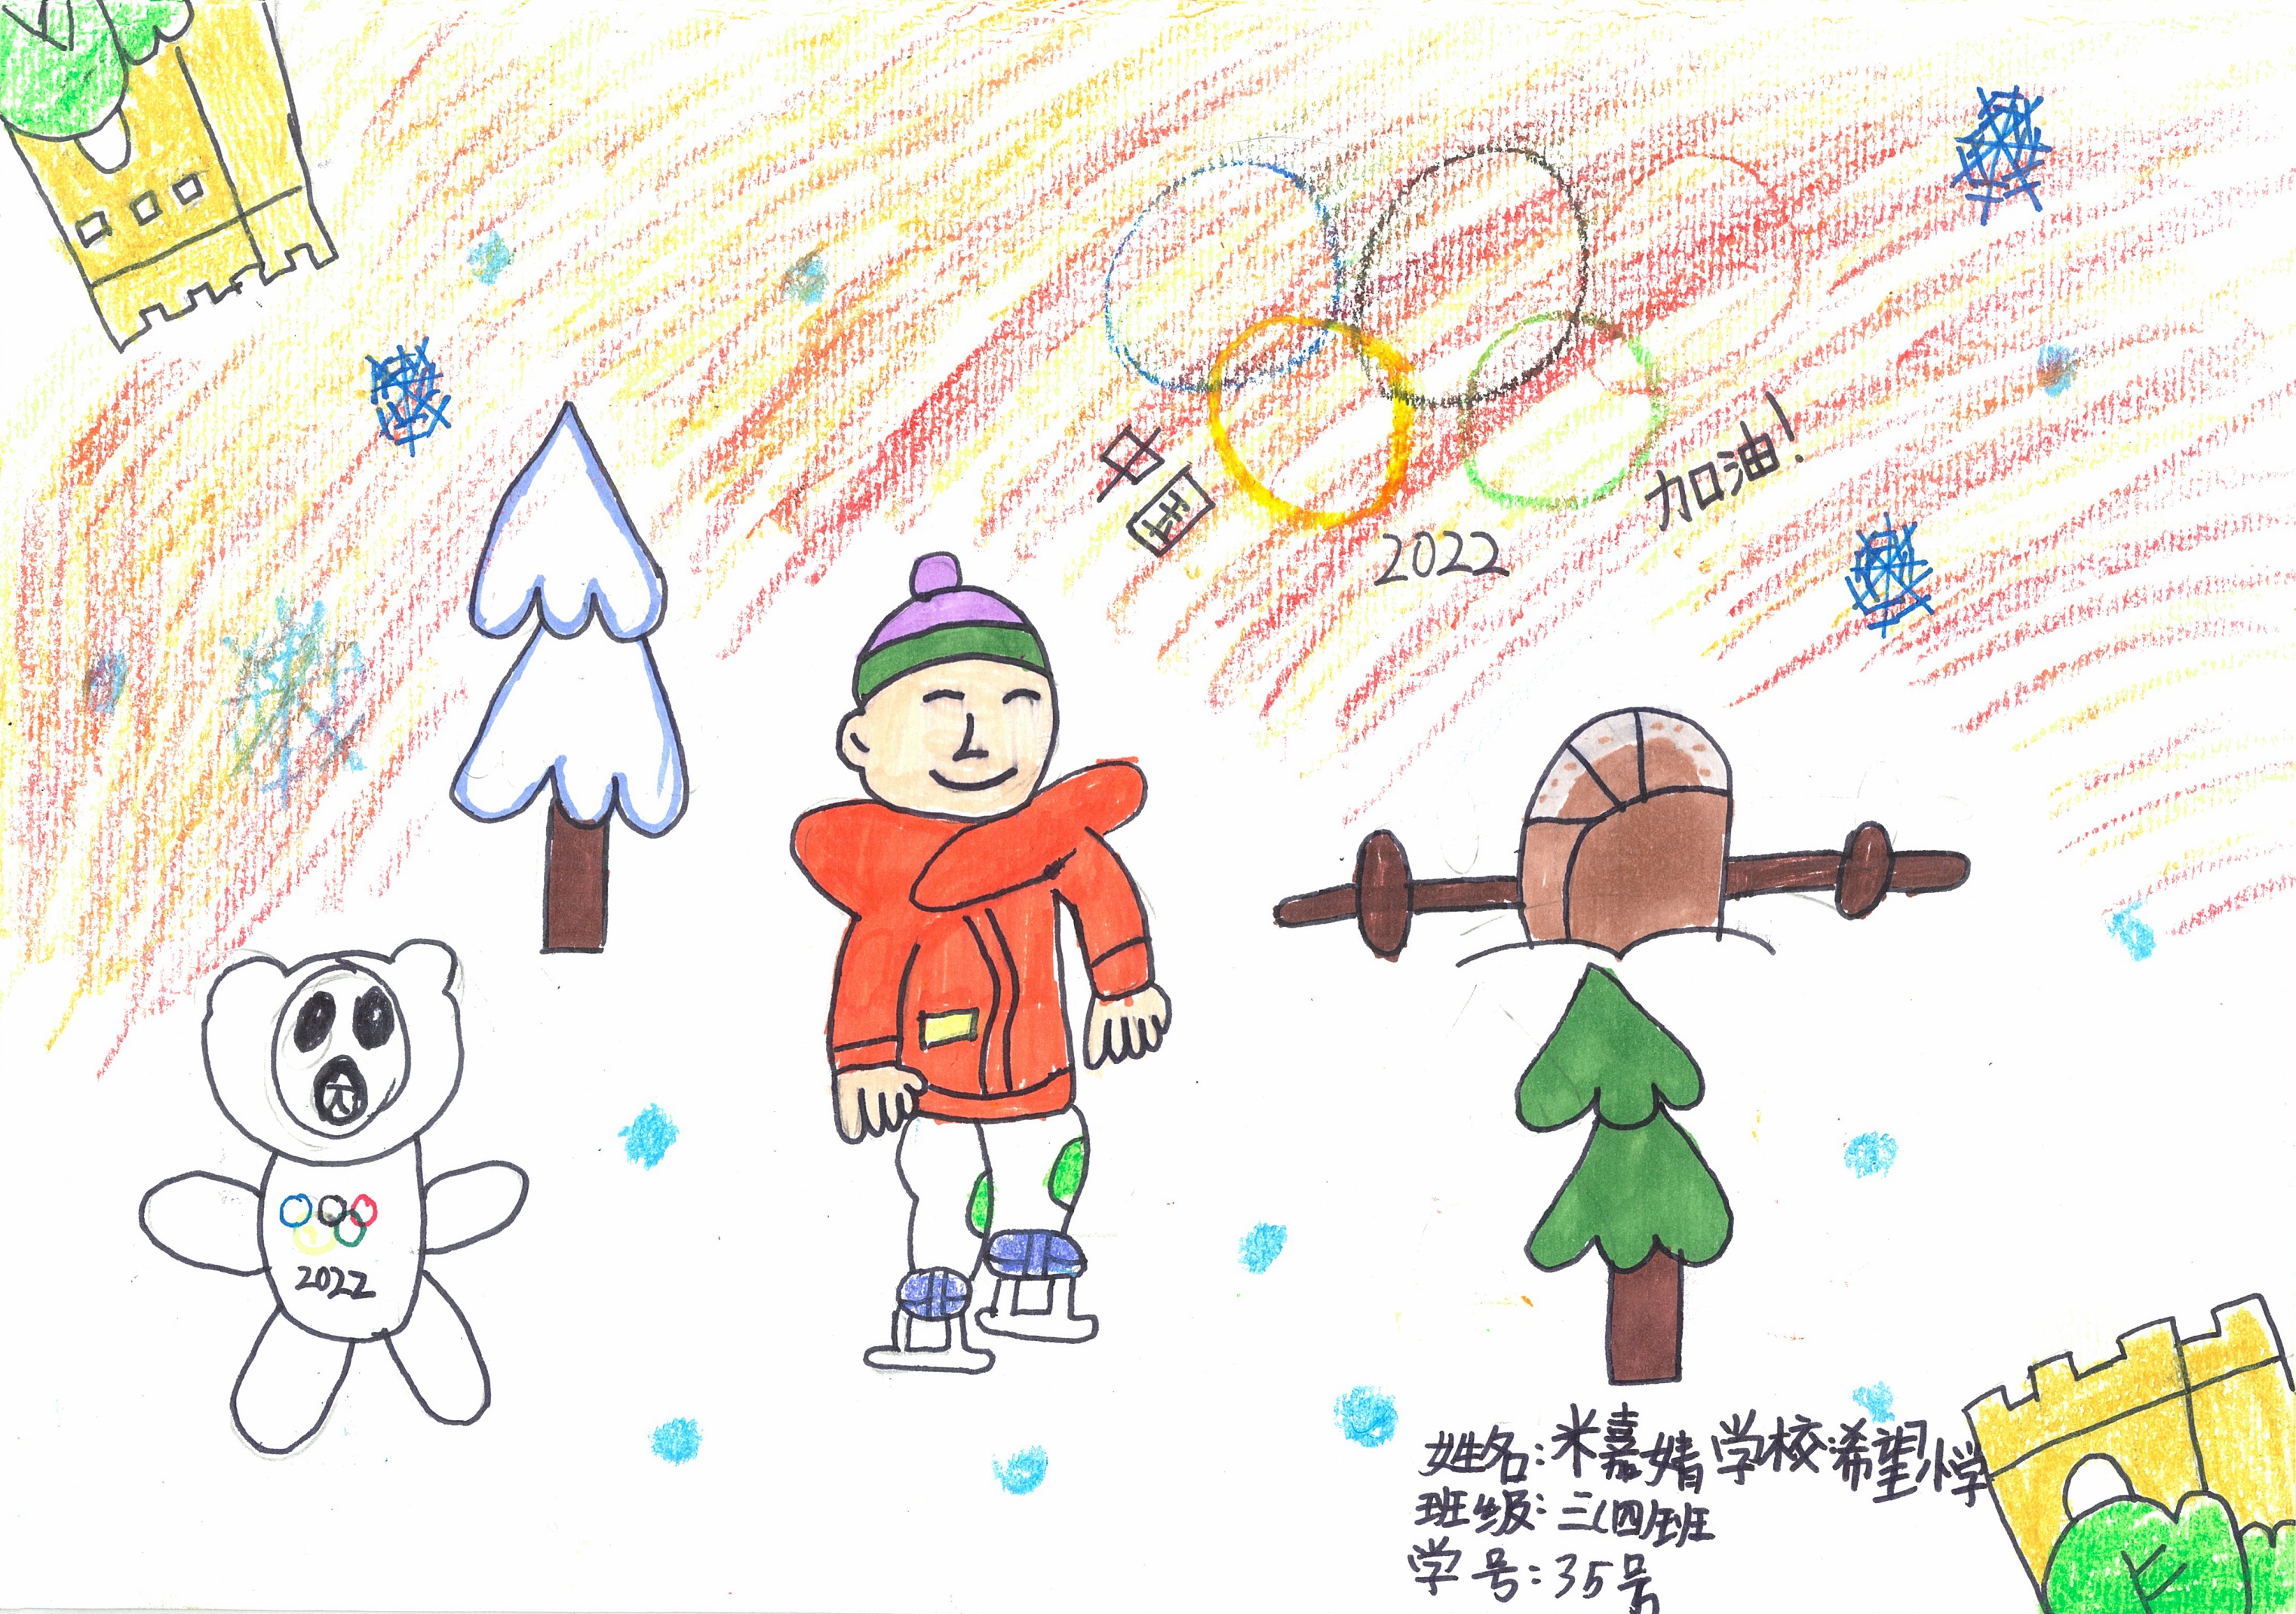 《我心中的冬奥荣耀时刻》Glory moments of the Winter Olympics in my heart +米嘉婧 Mi Jiajing